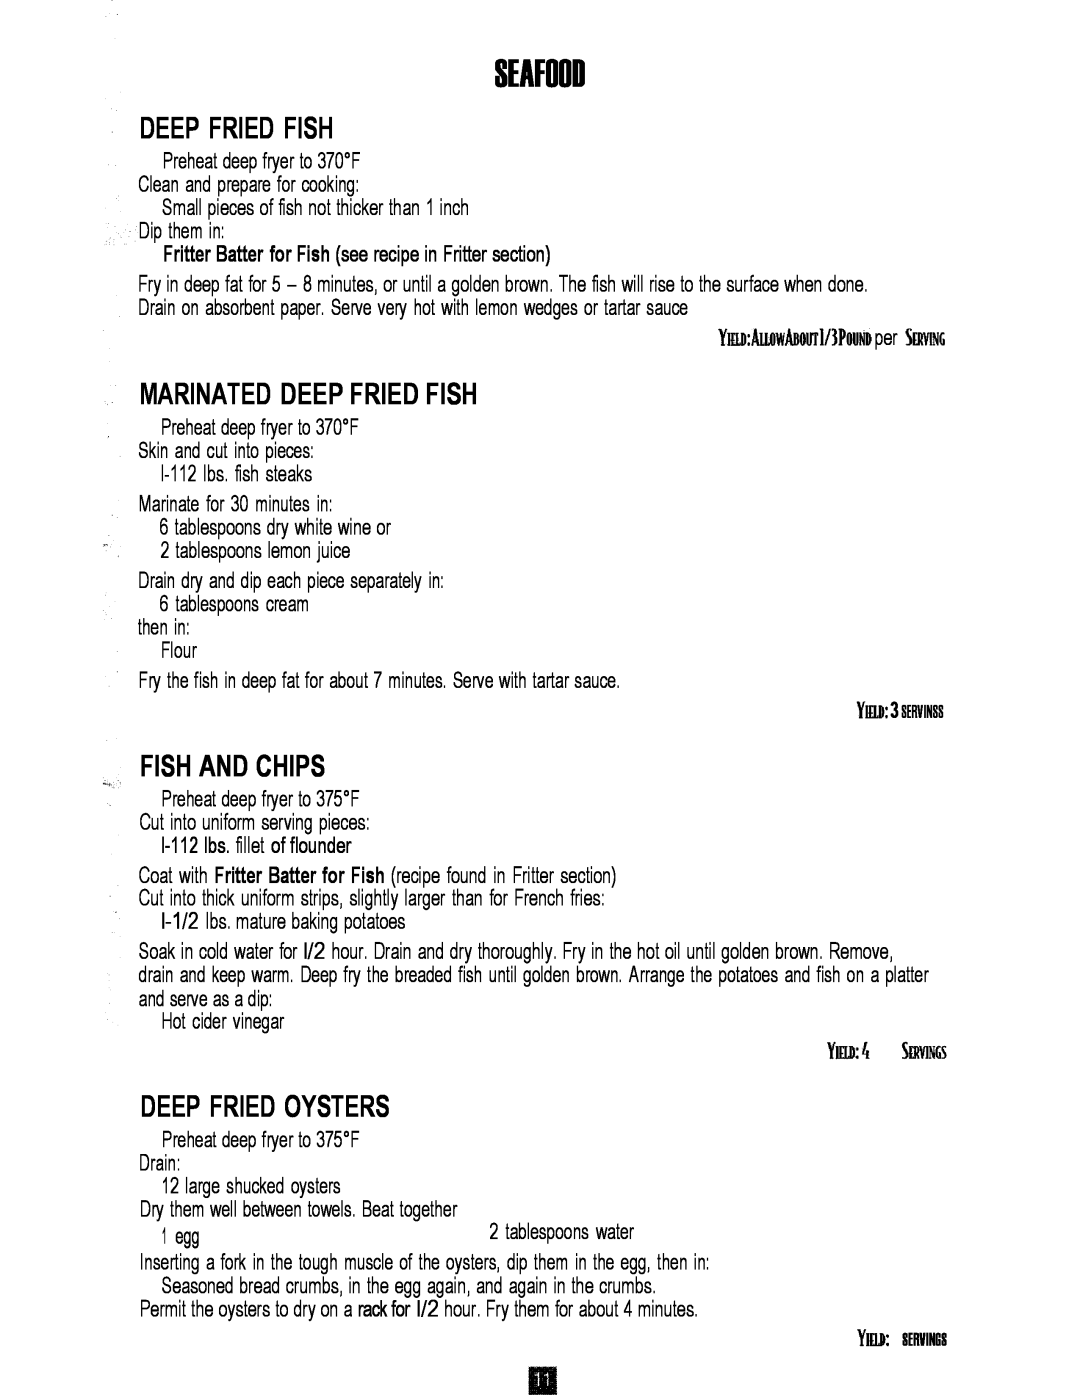 Oster 3246 manual Deep Fried Fish, MARlNATED DEEP FRIED FISH, Fish And Chips, Deep Fried Oysters, Seafood 